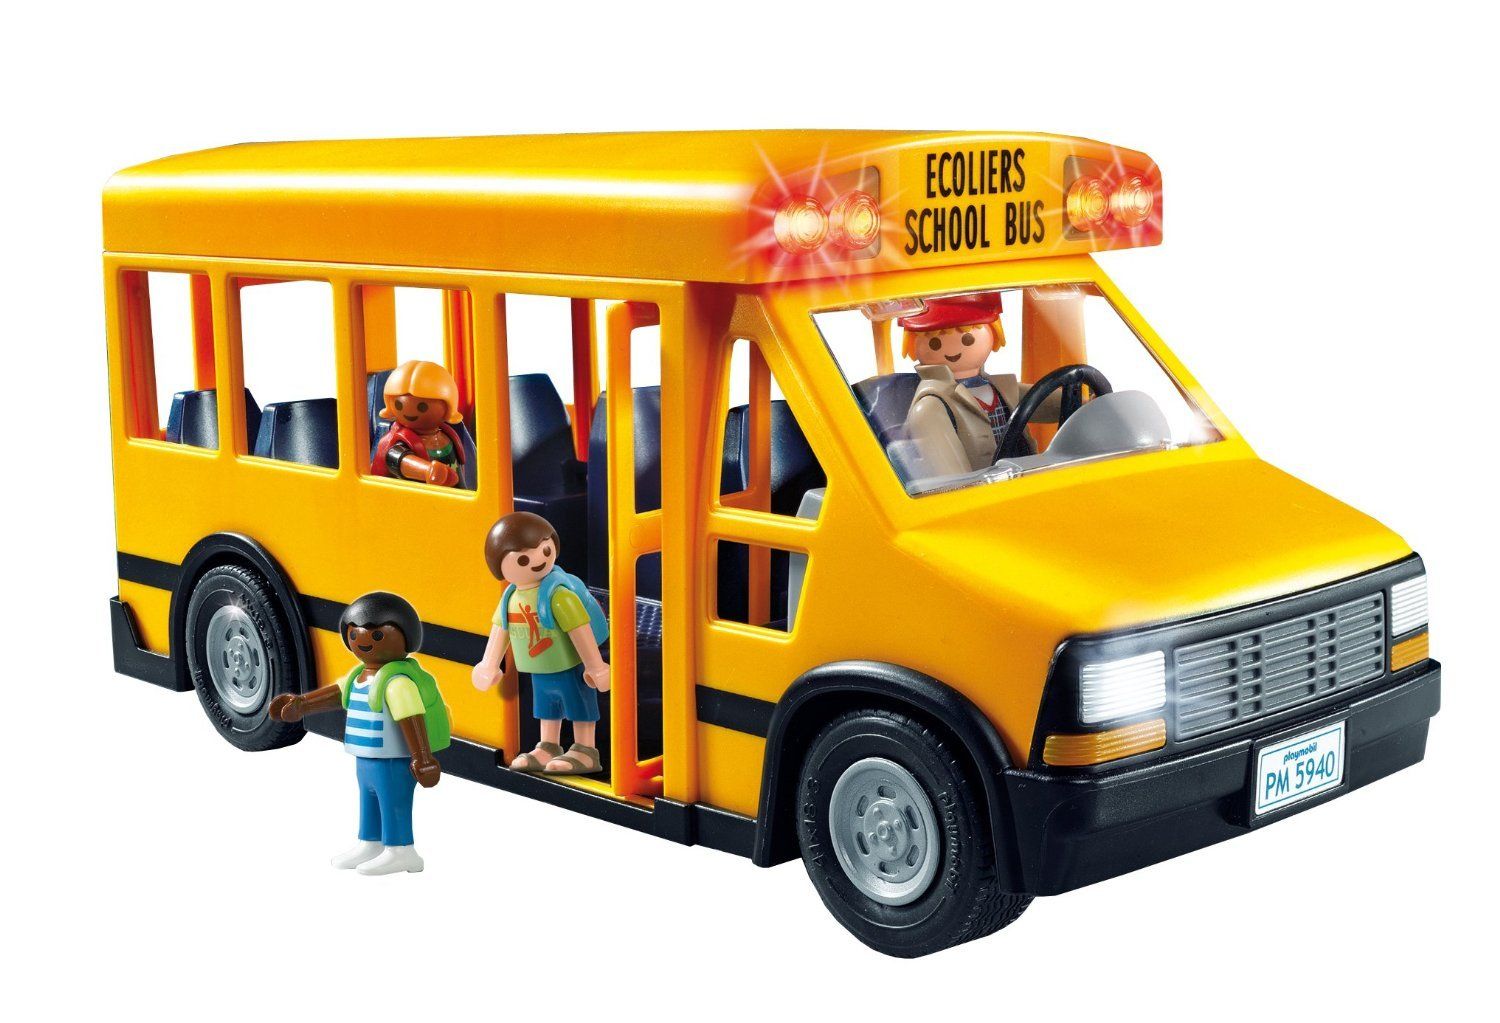 Playmobil school bus: Great for getting kids kindergarten ready